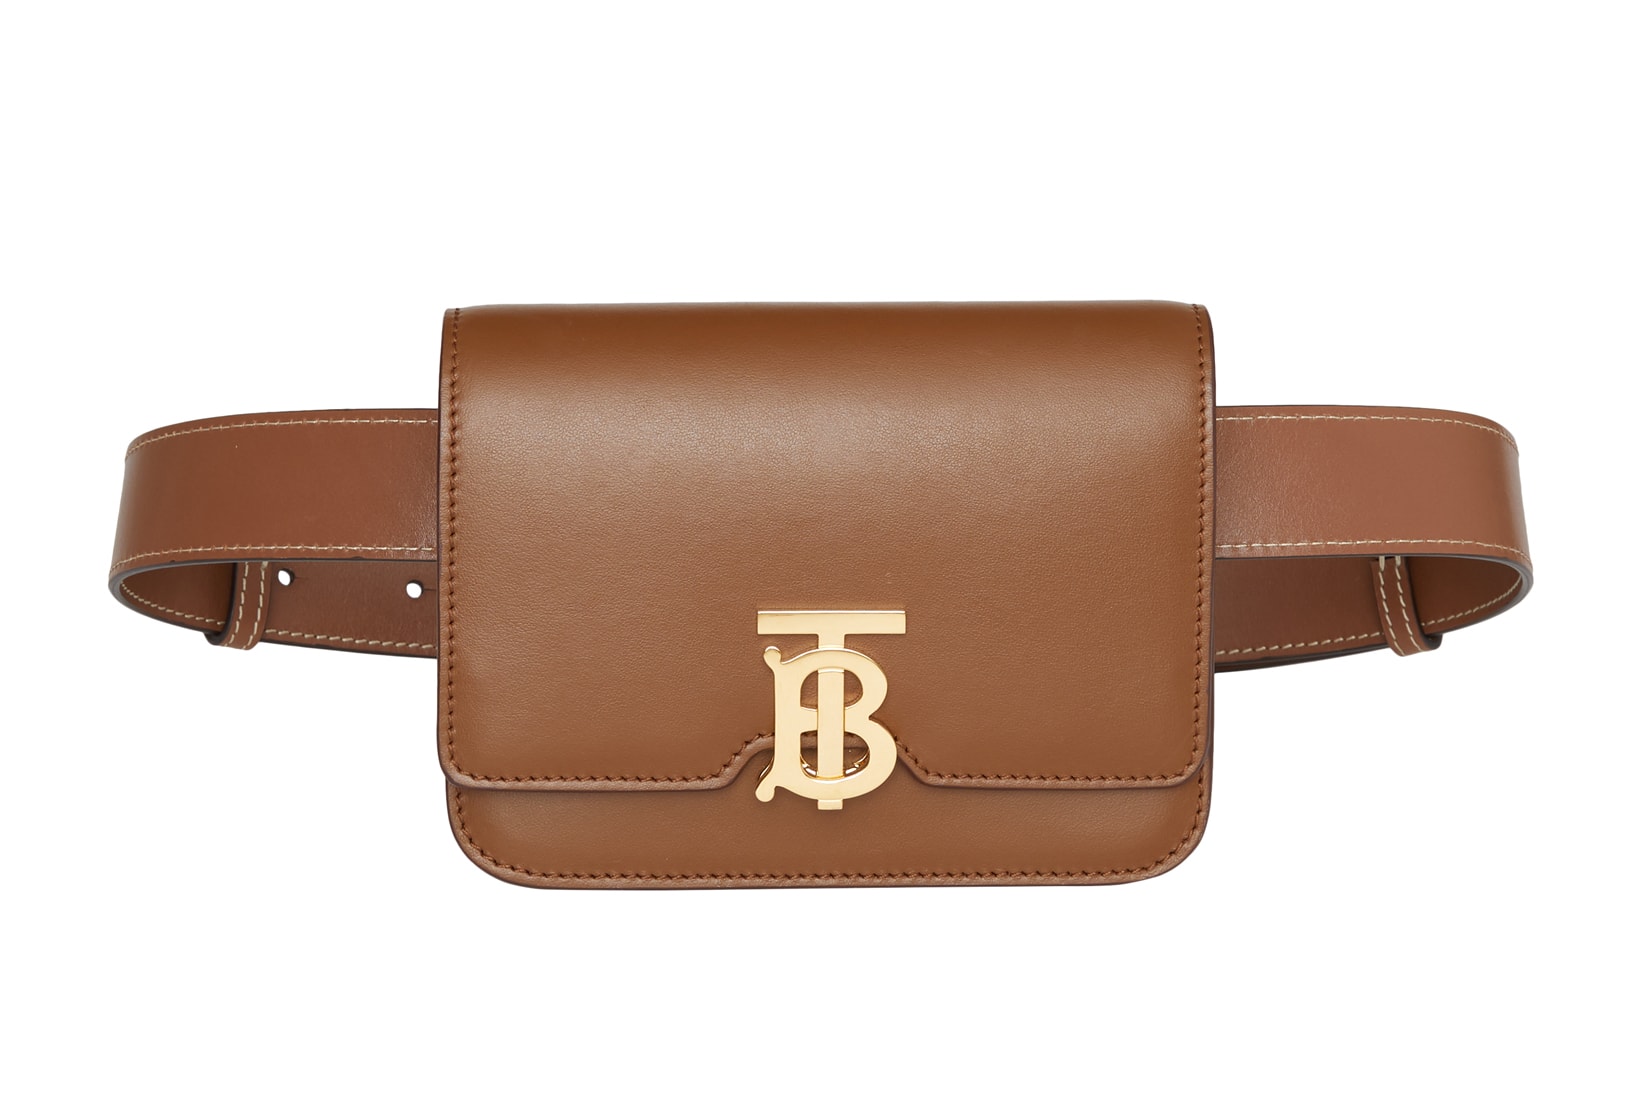 Burberry Leather Belted TB Bag Malt Brown